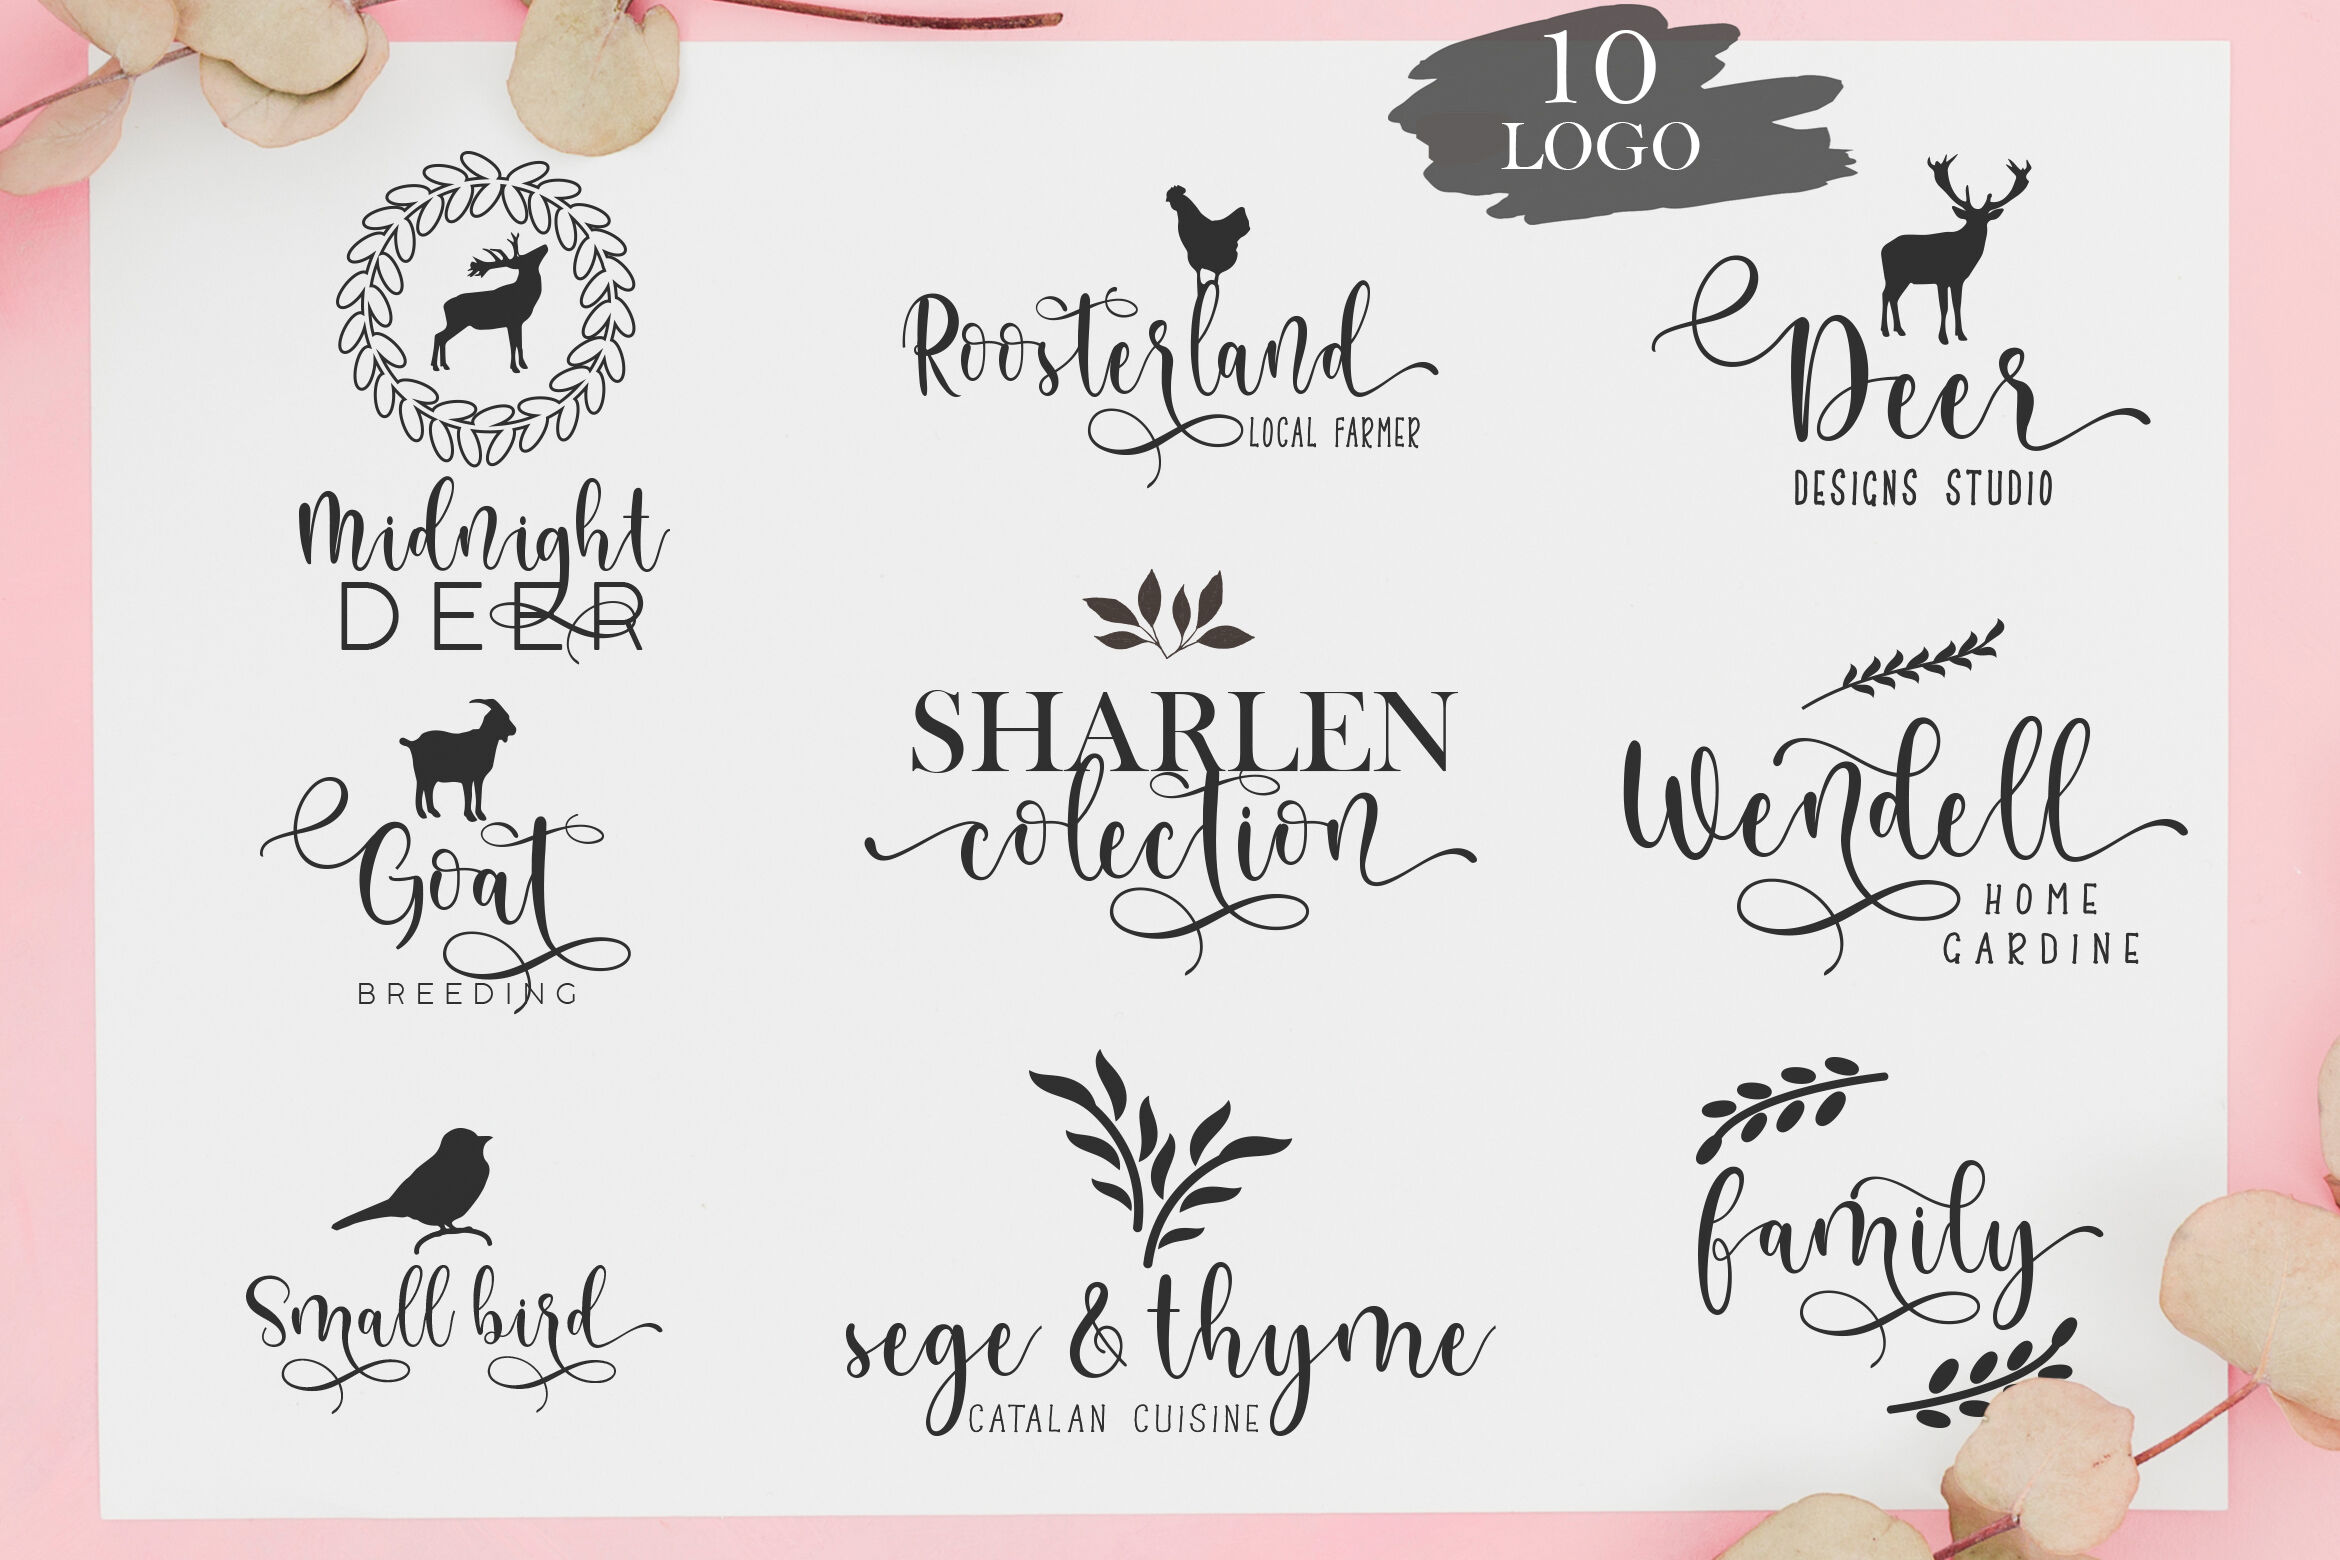 Beauty Sript Font Bonus 10 Logos 81 Icon By Star Studio Thehungryjpeg Com